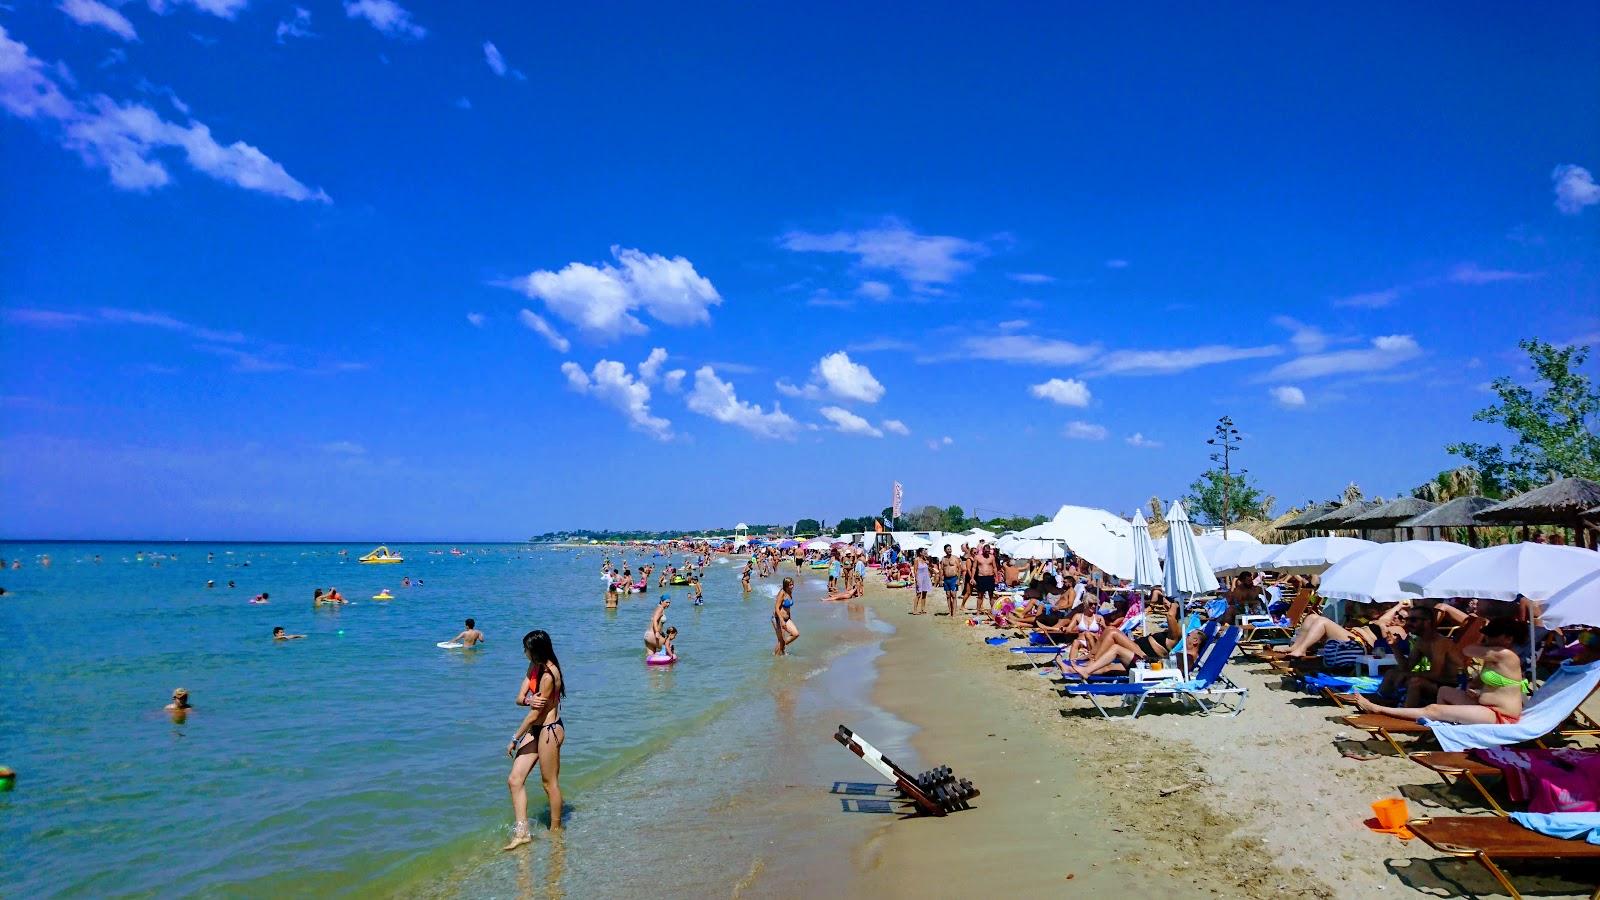 Foto de Vergia beach área de resort de praia